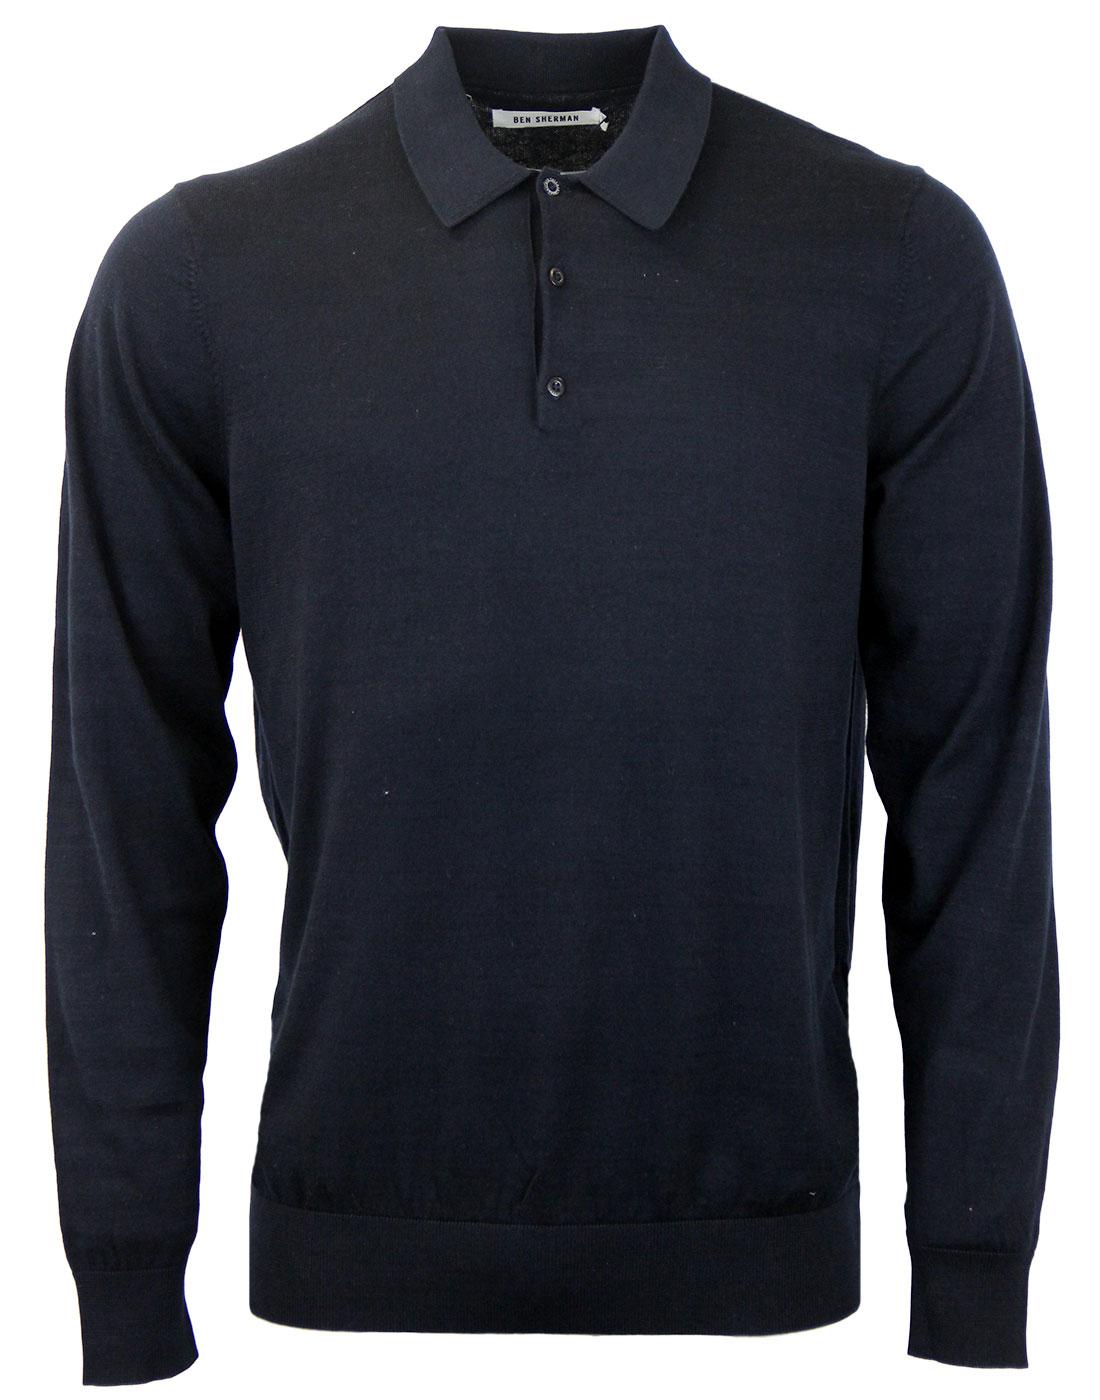 BEN SHERMAN Retro Mod Knitted Long Sleeve Polo Shirt in Navy